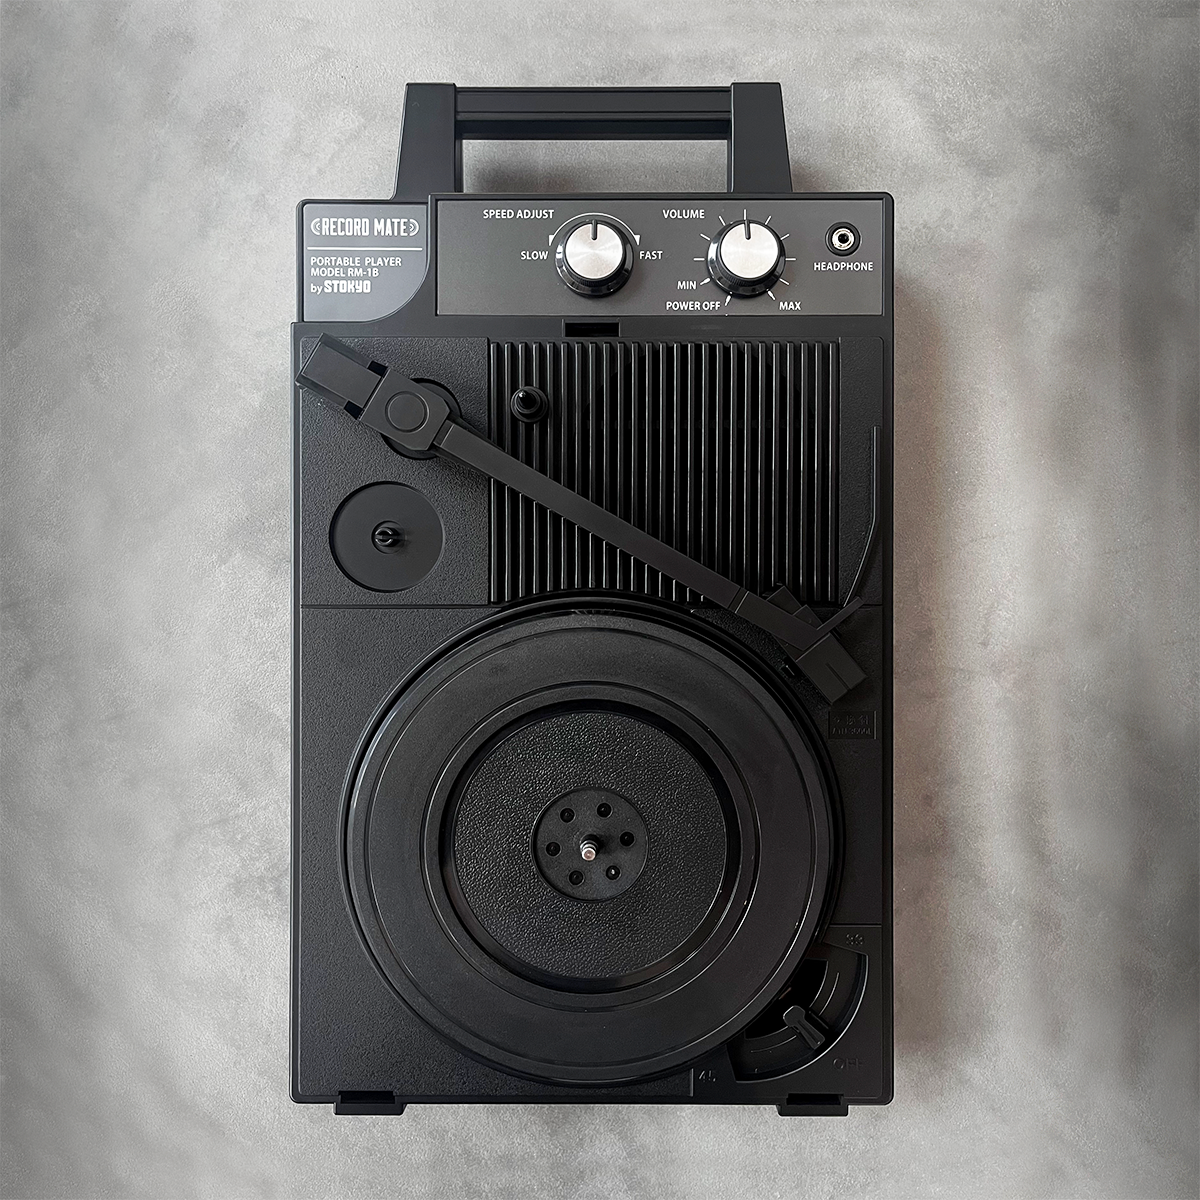 STOKYO RECORD MATE Portable Record Player BLACK EDITION RM-1B